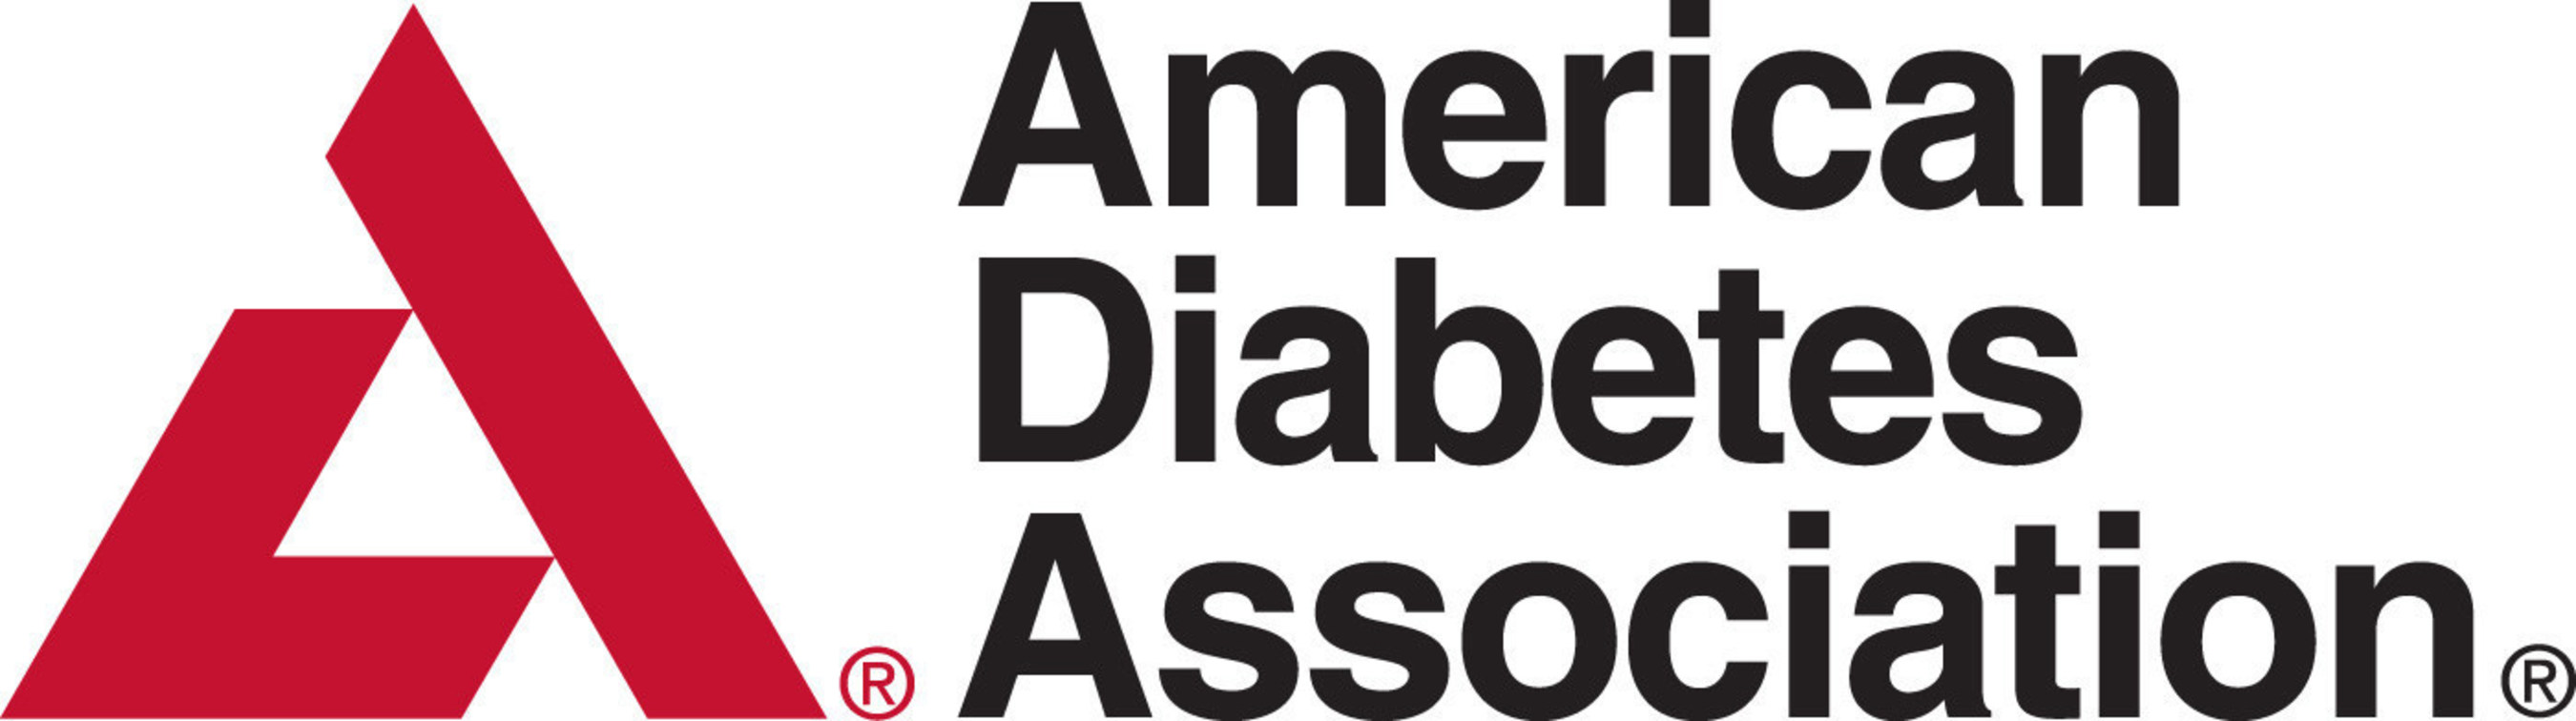 (PRNewsFoto/American Diabetes Association) (PRNewsFoto/American Diabetes Association)